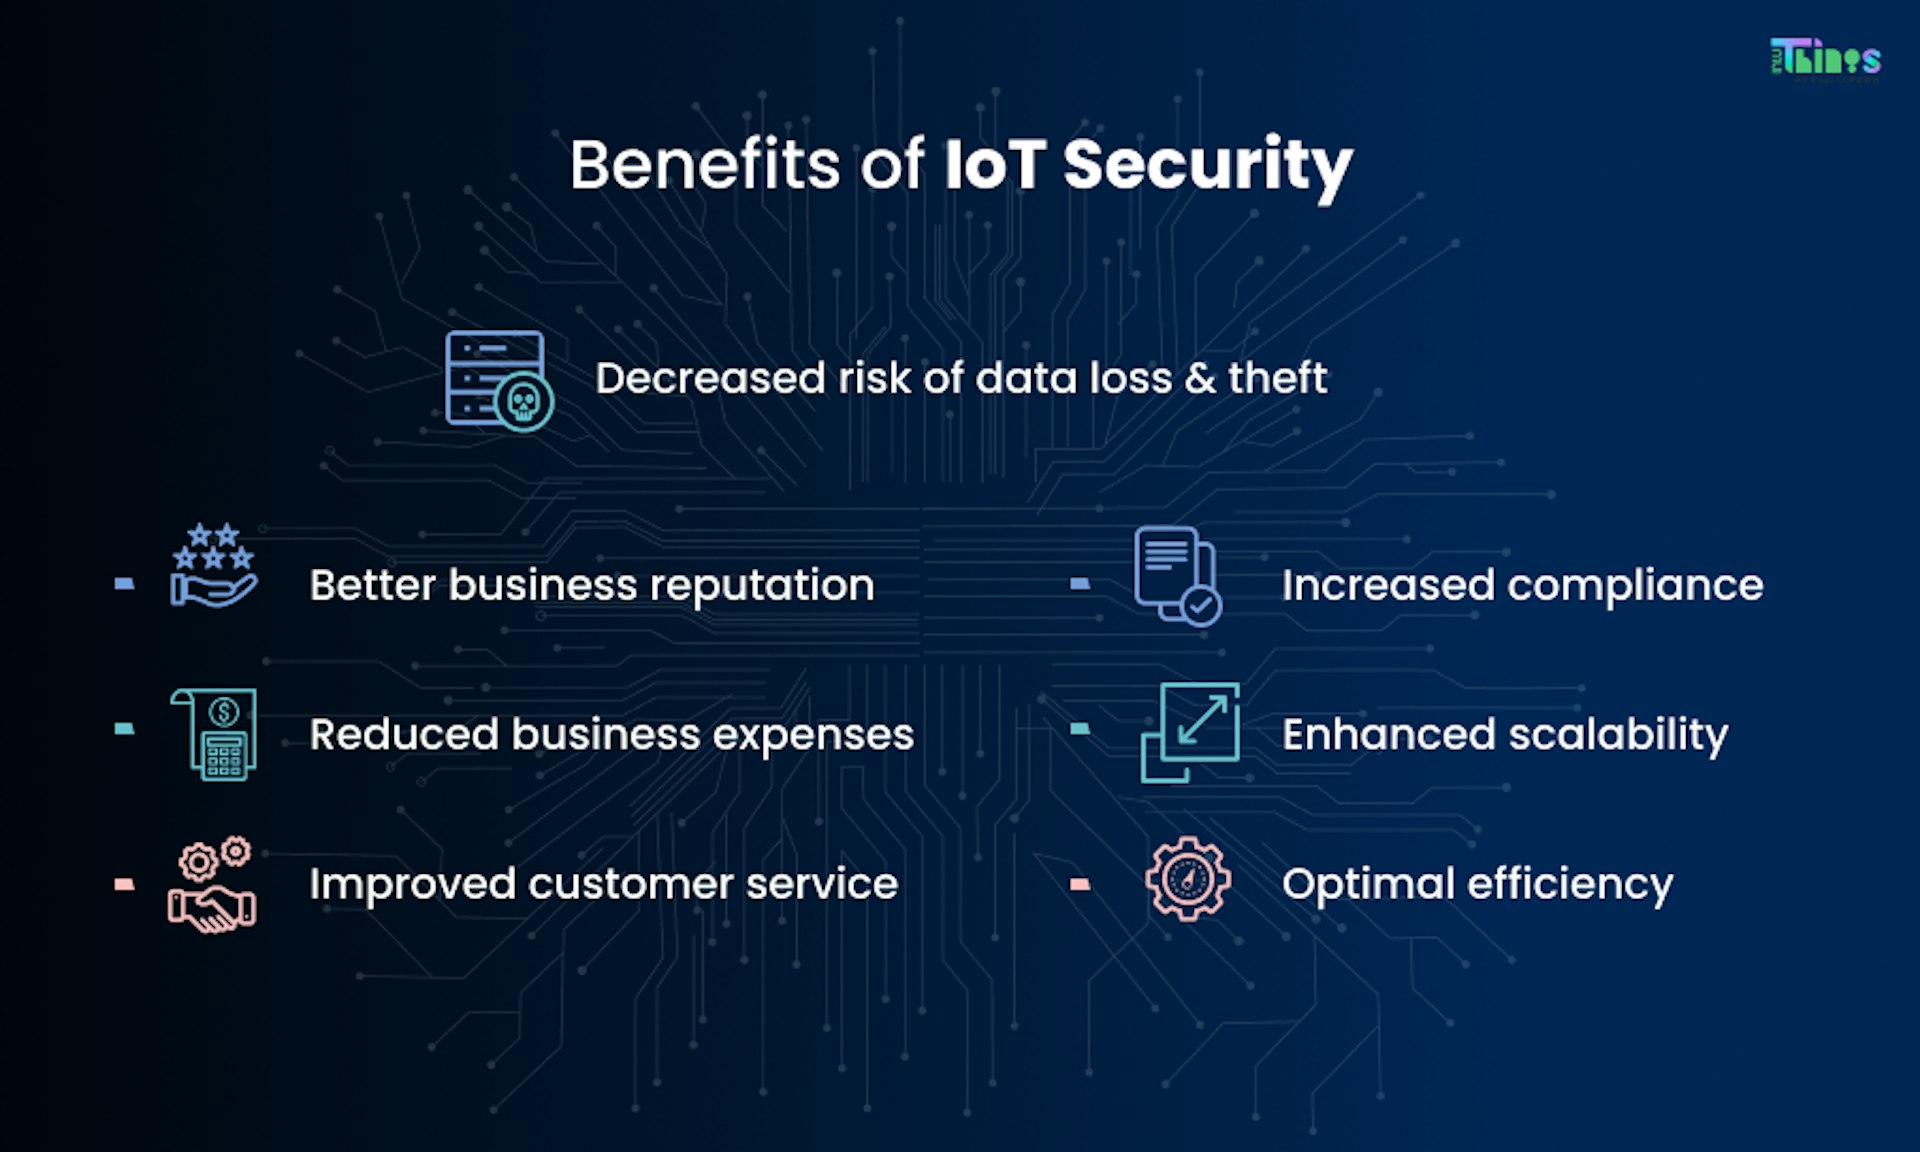 Benefits of IoT Security